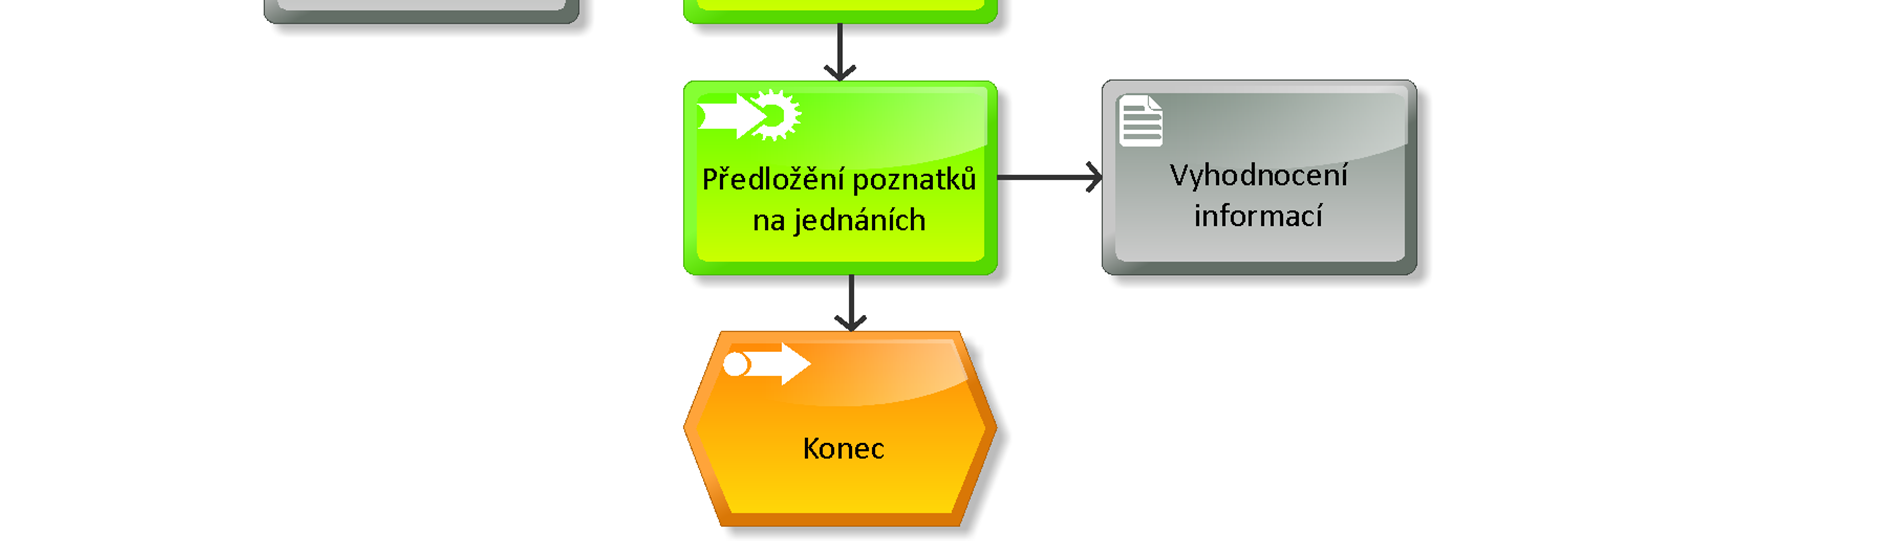 Obrázek 12: Diagram procesu